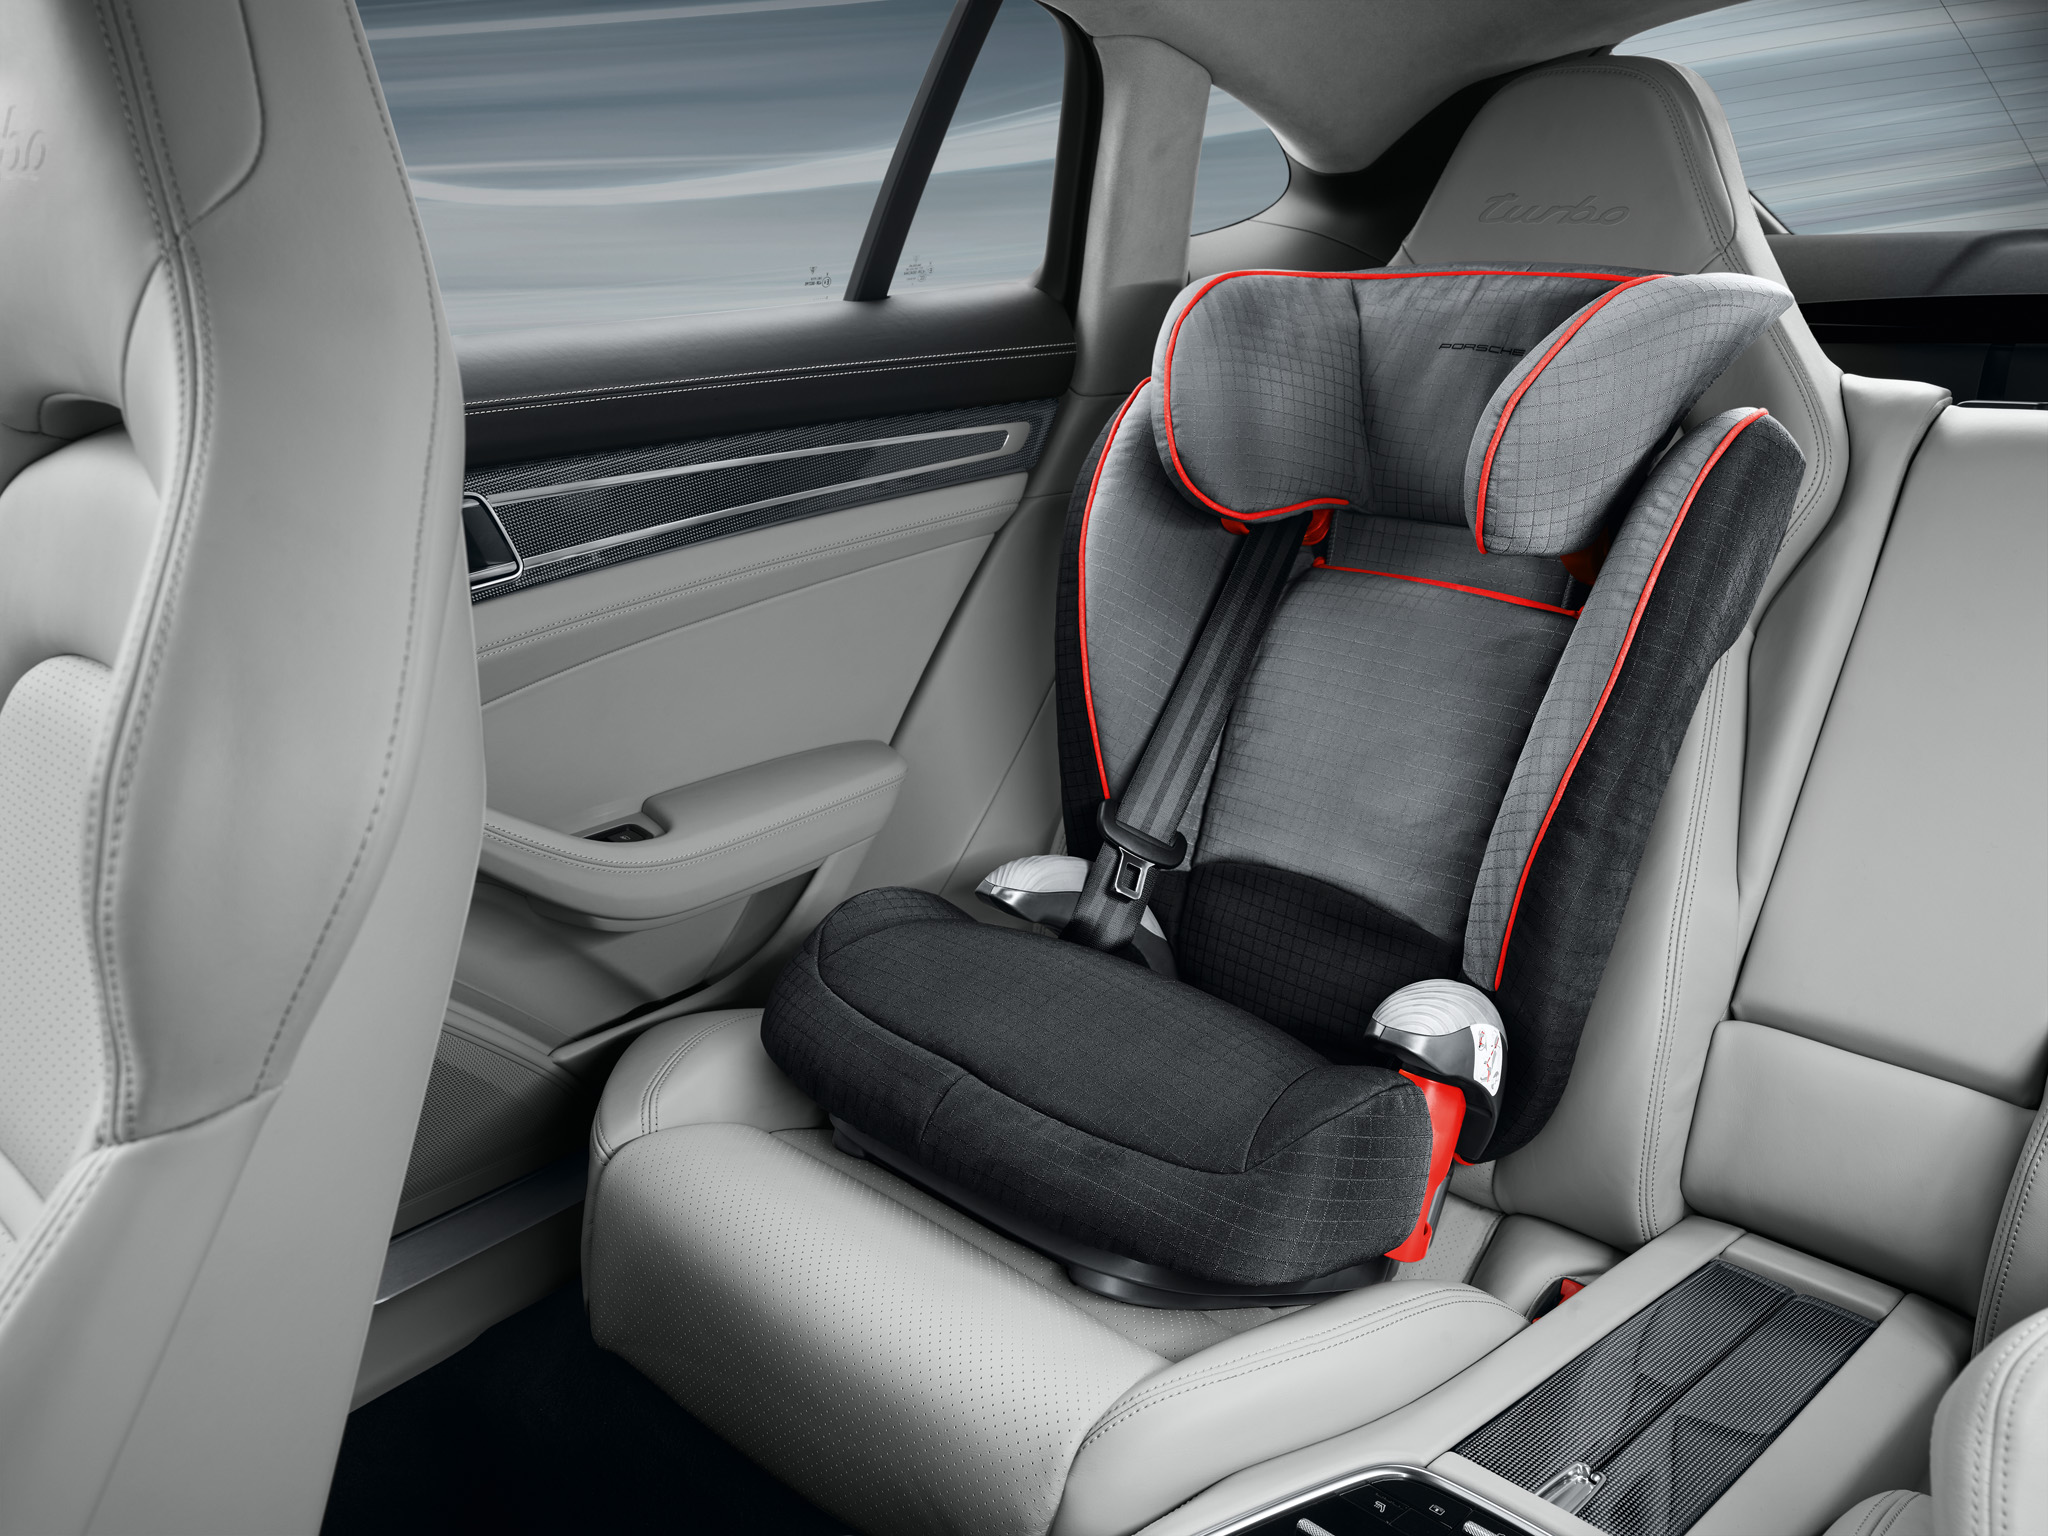 Детское автокресло Porsche Junior Plus Seat ISOFIT, g2+g3